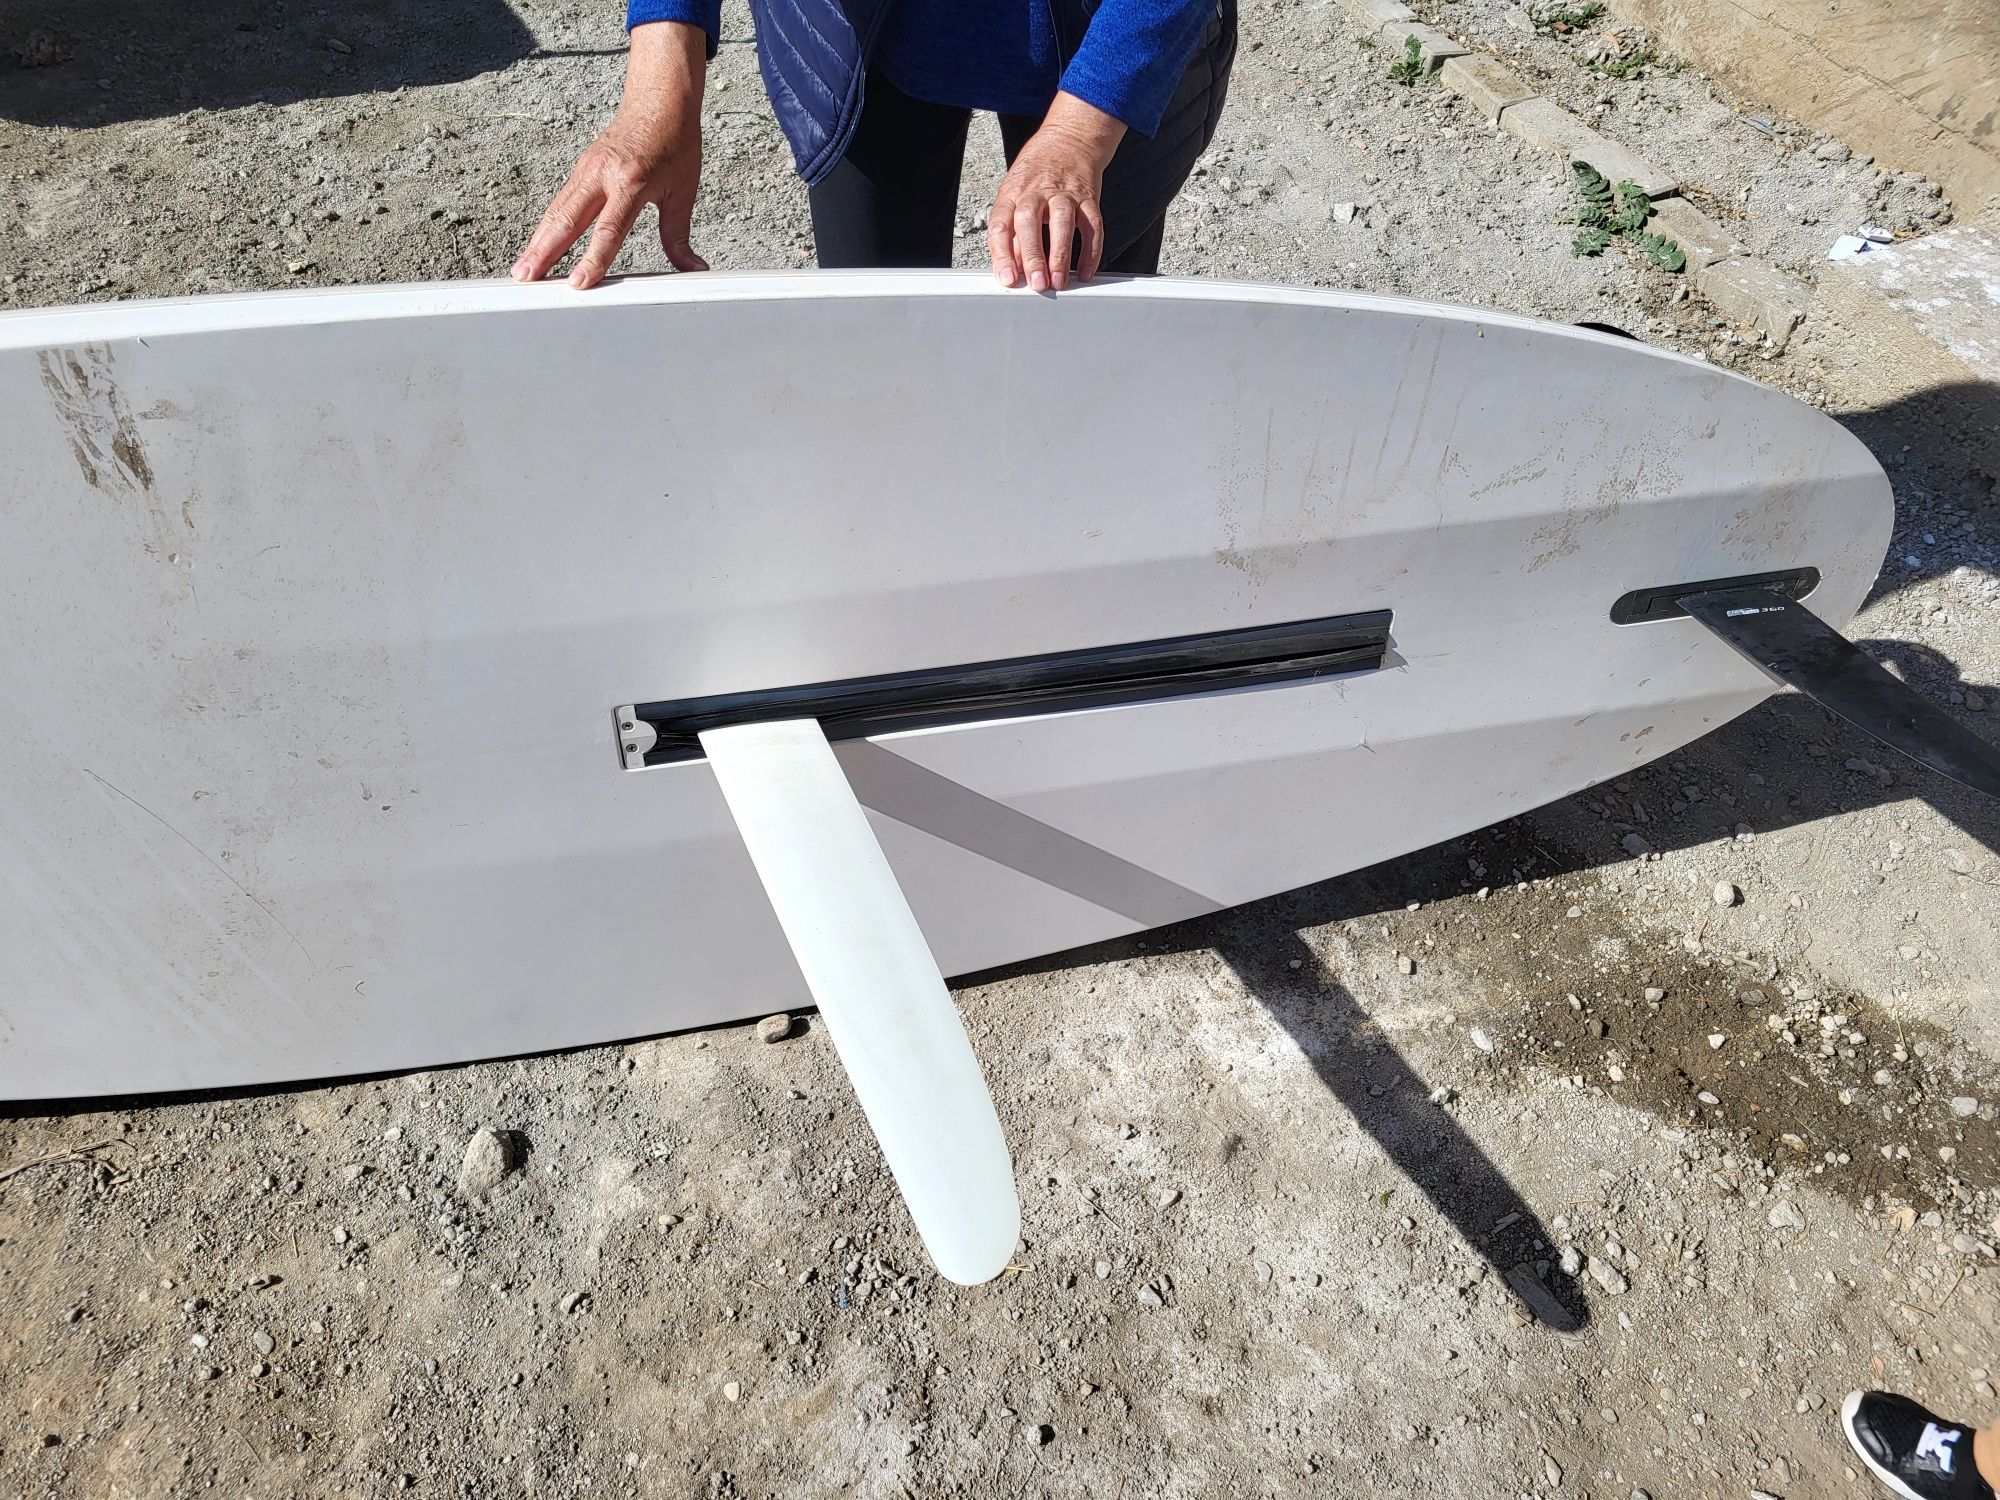 Placa windsurf model bic techno 293